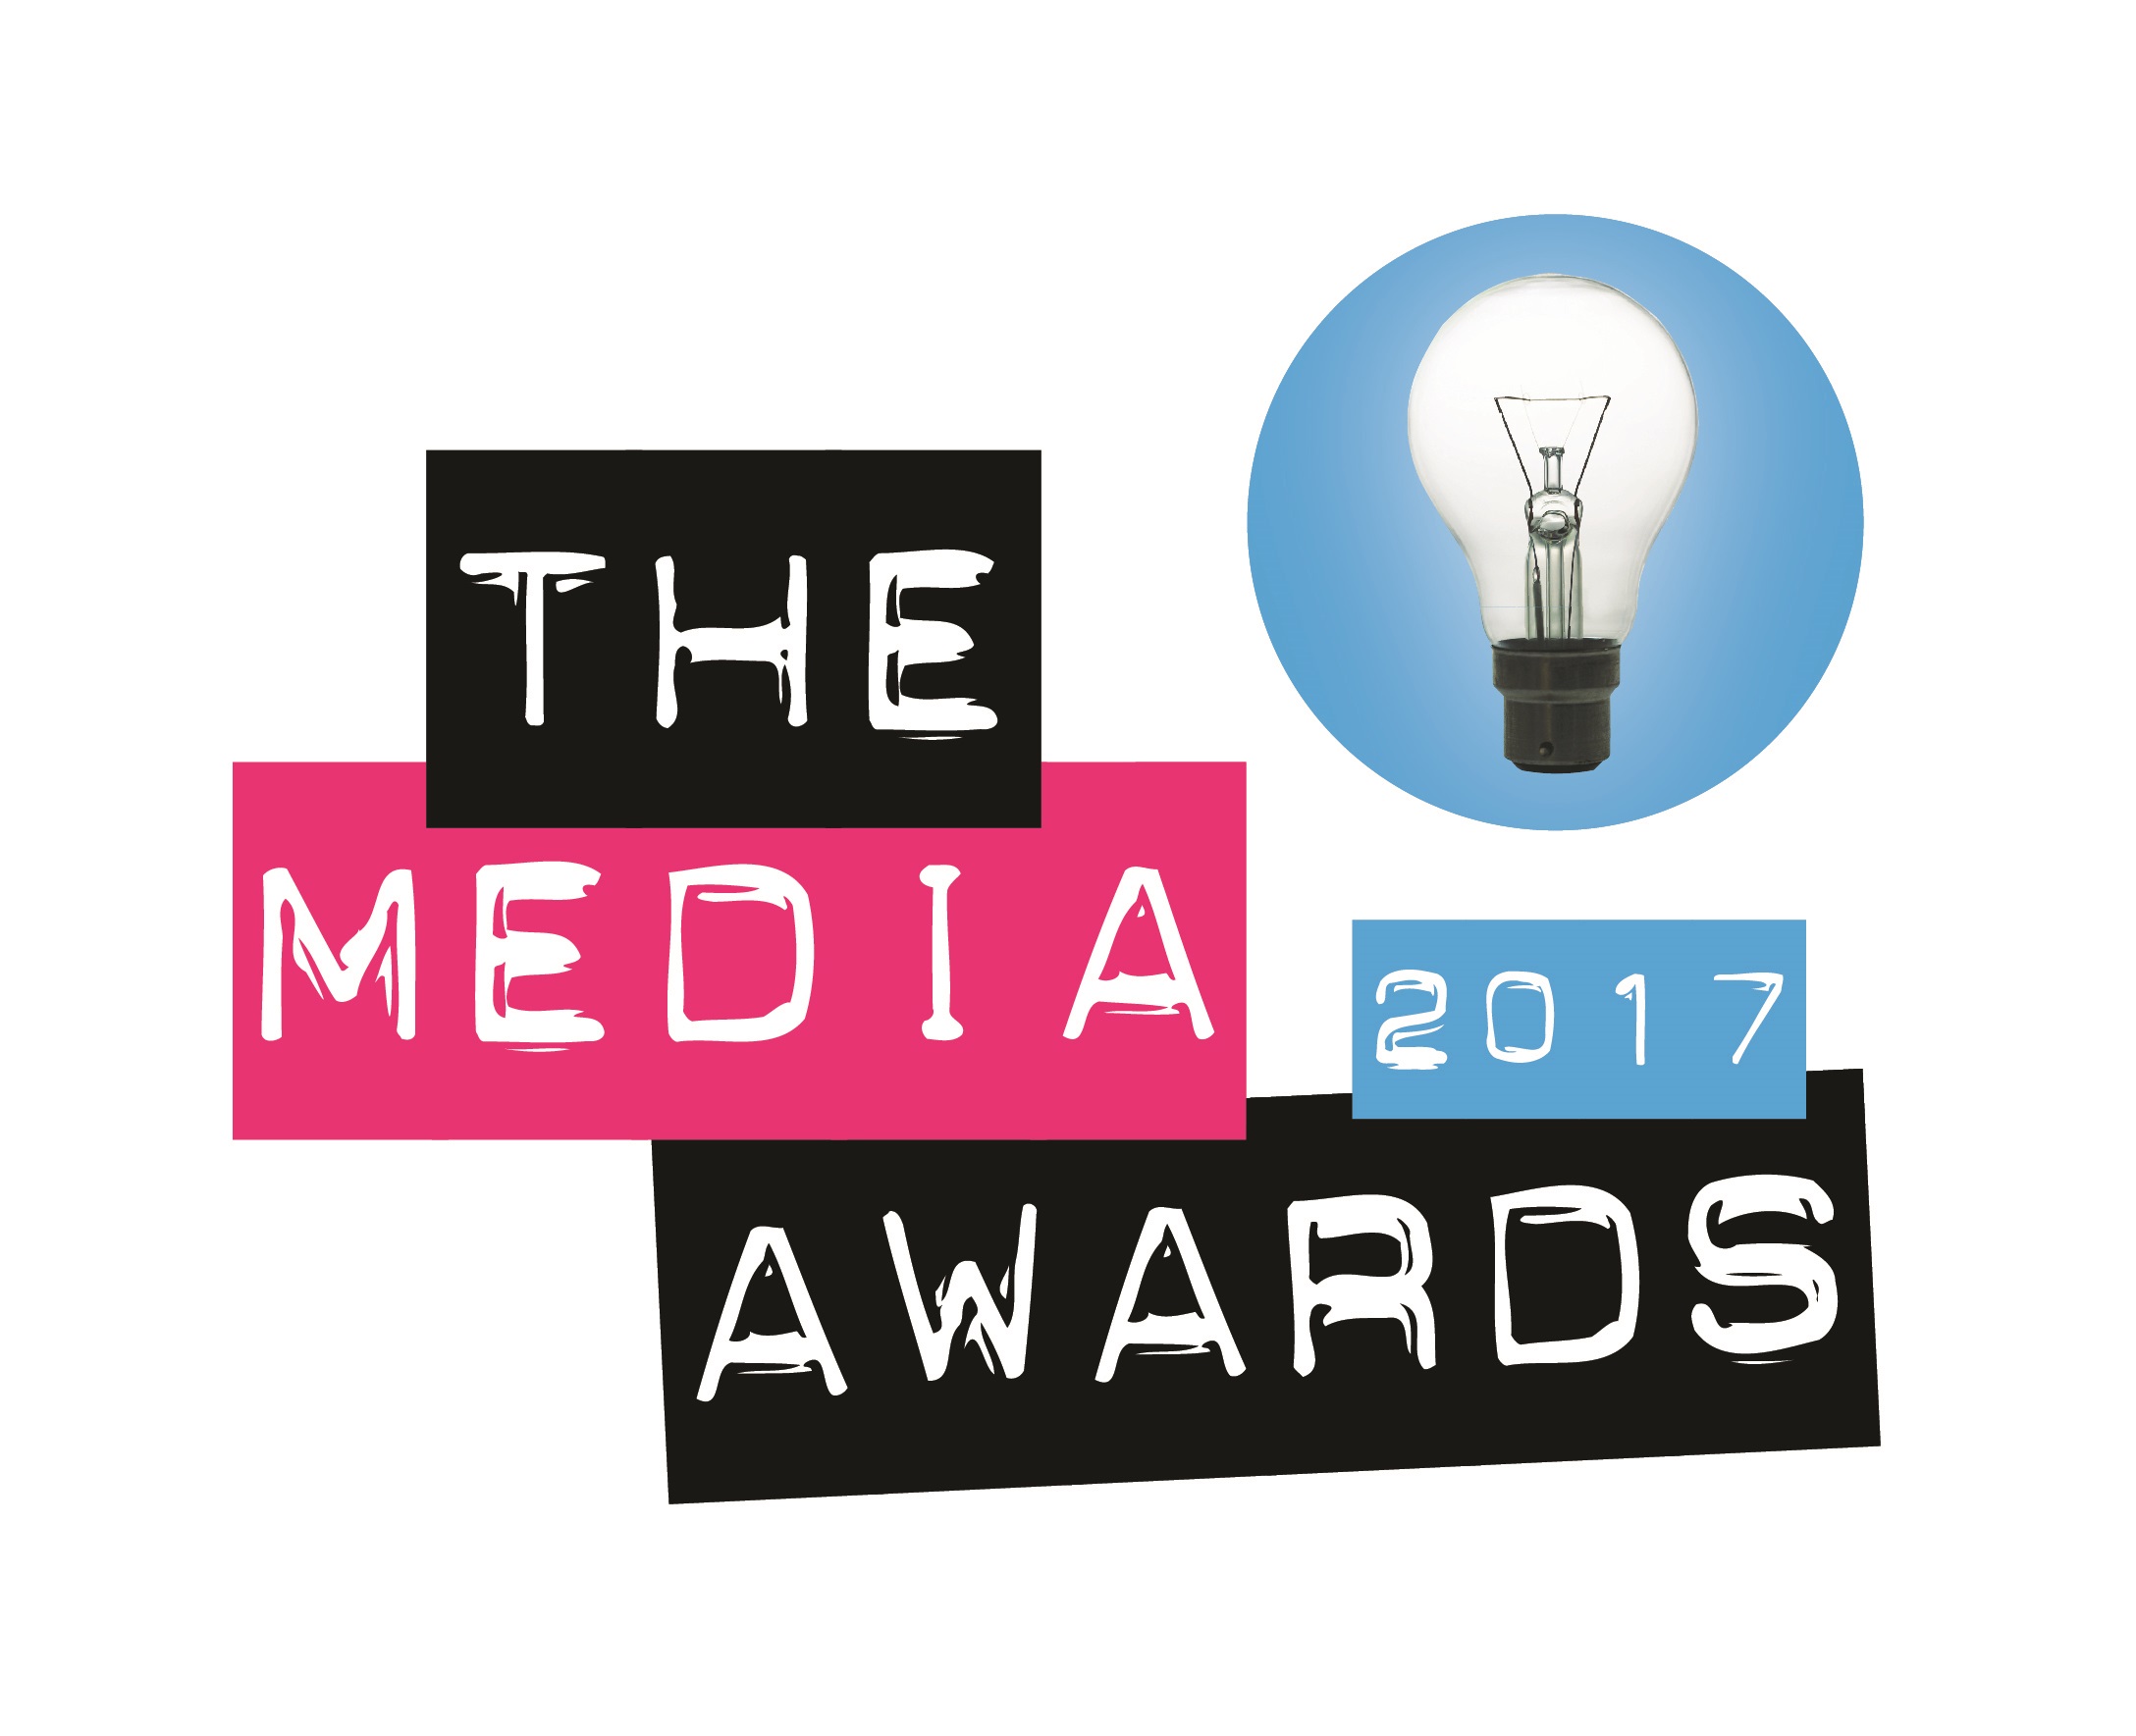 Media Awards logo